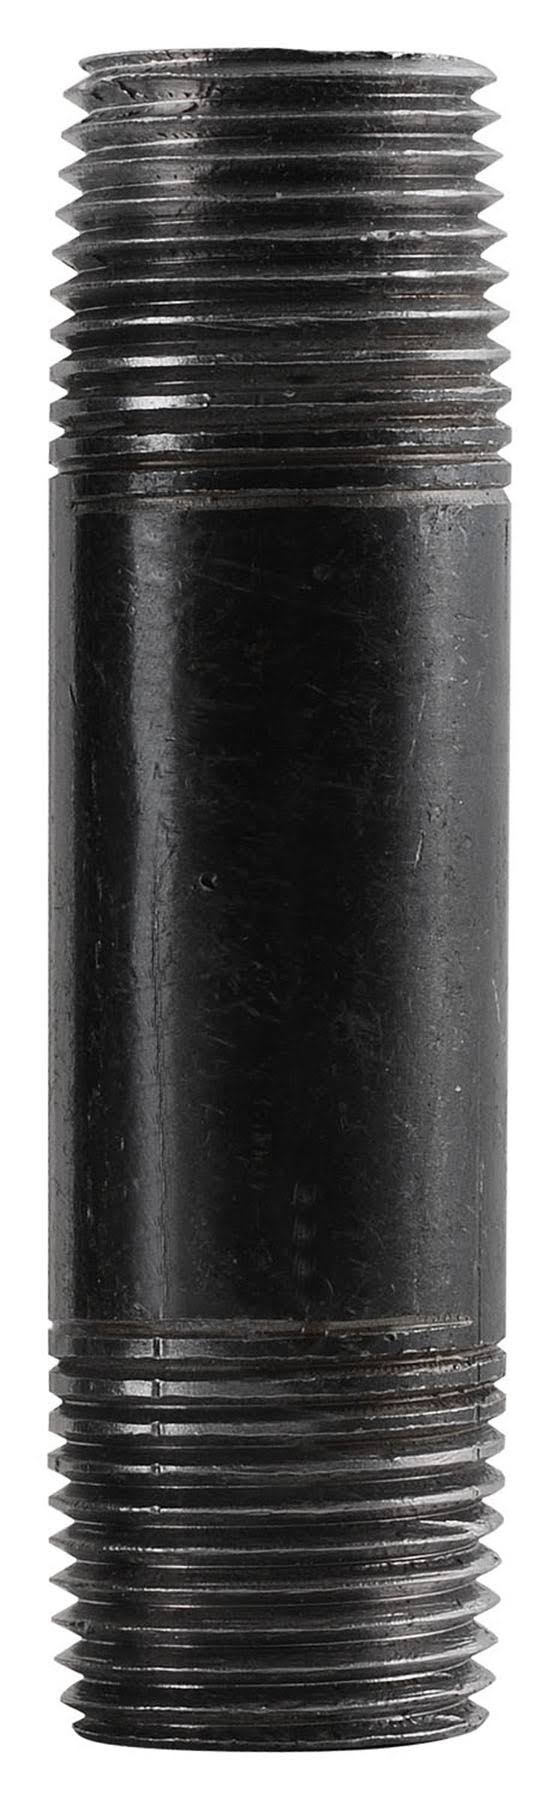 LDR 300 Pipe Nipple - Black, 1"x5"